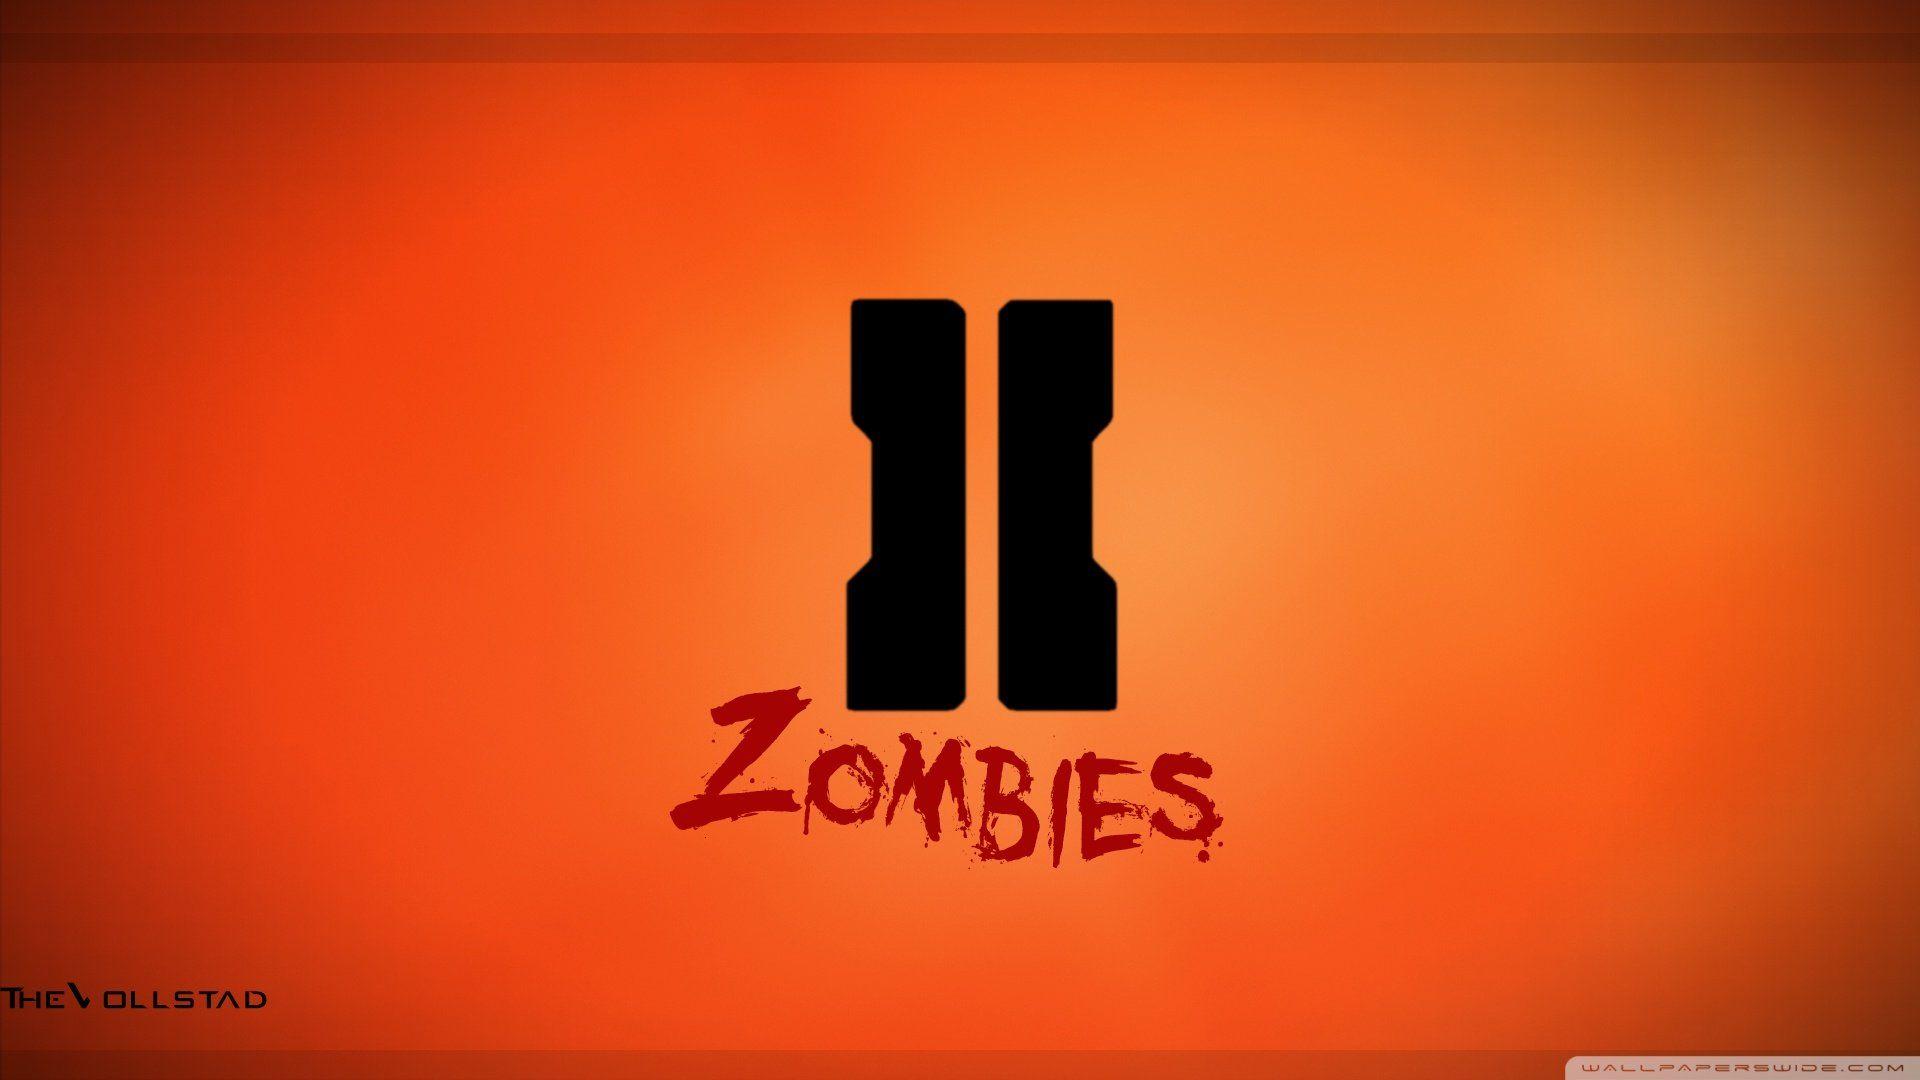 cod bo2 zombies wallpaper